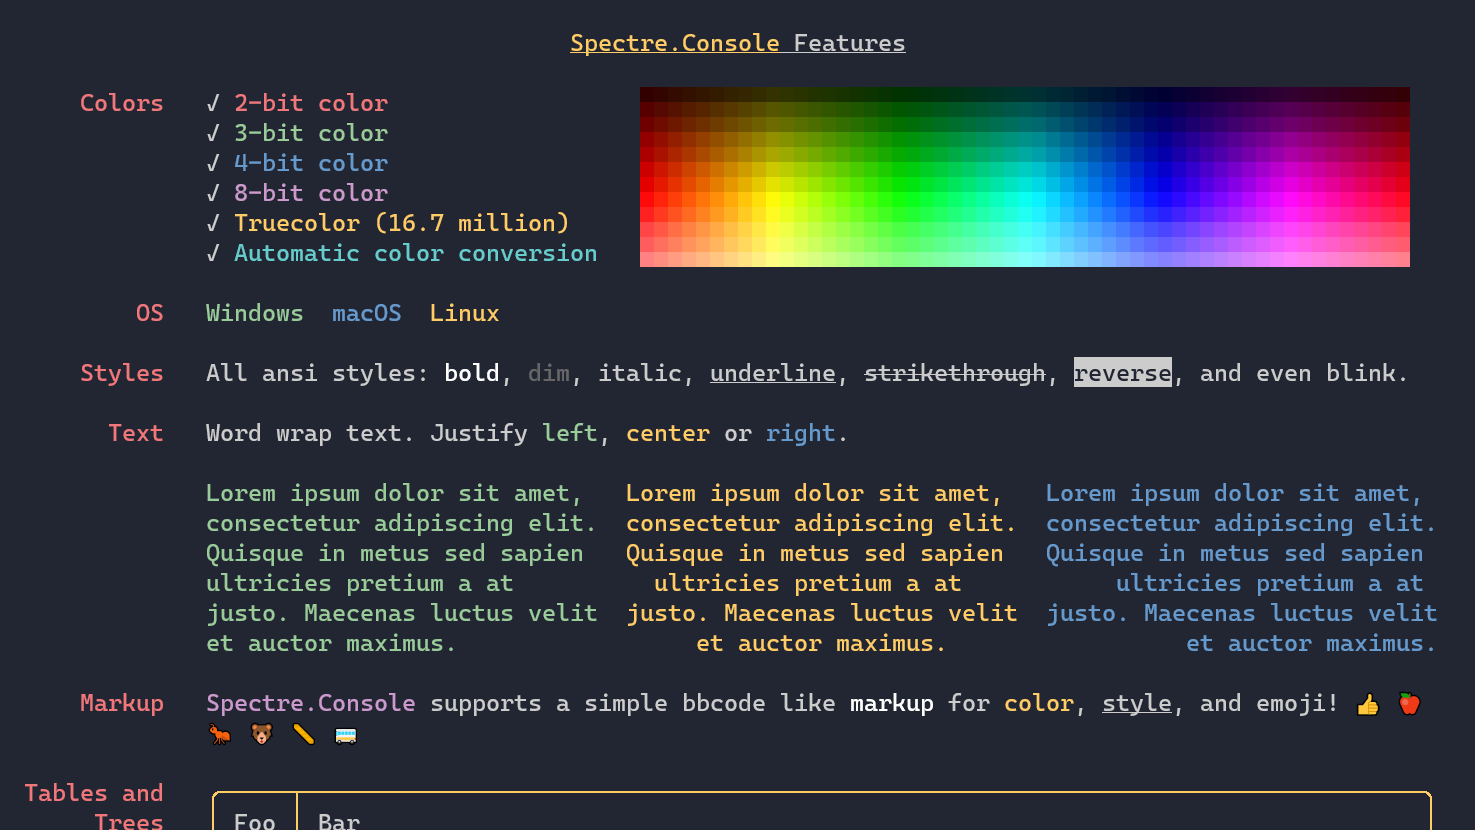 Spectre.Console features